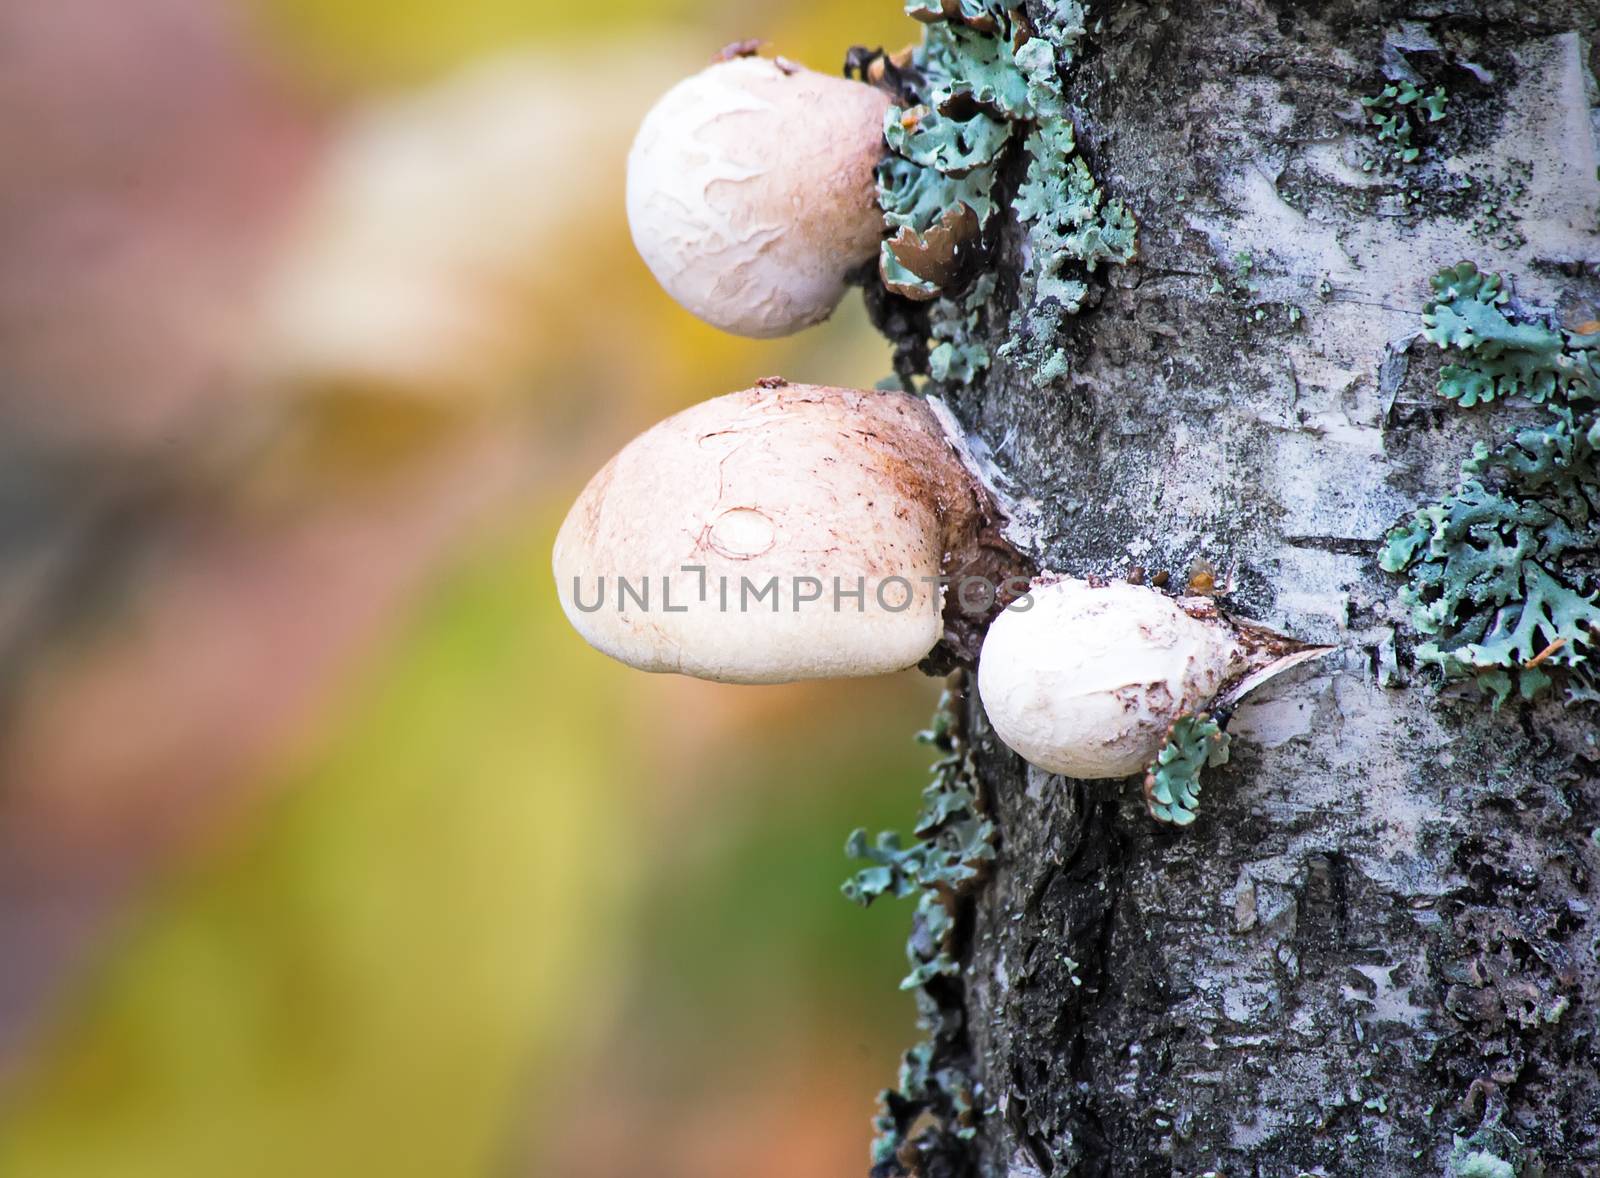 Tinder fungus grows on birch. by georgina198